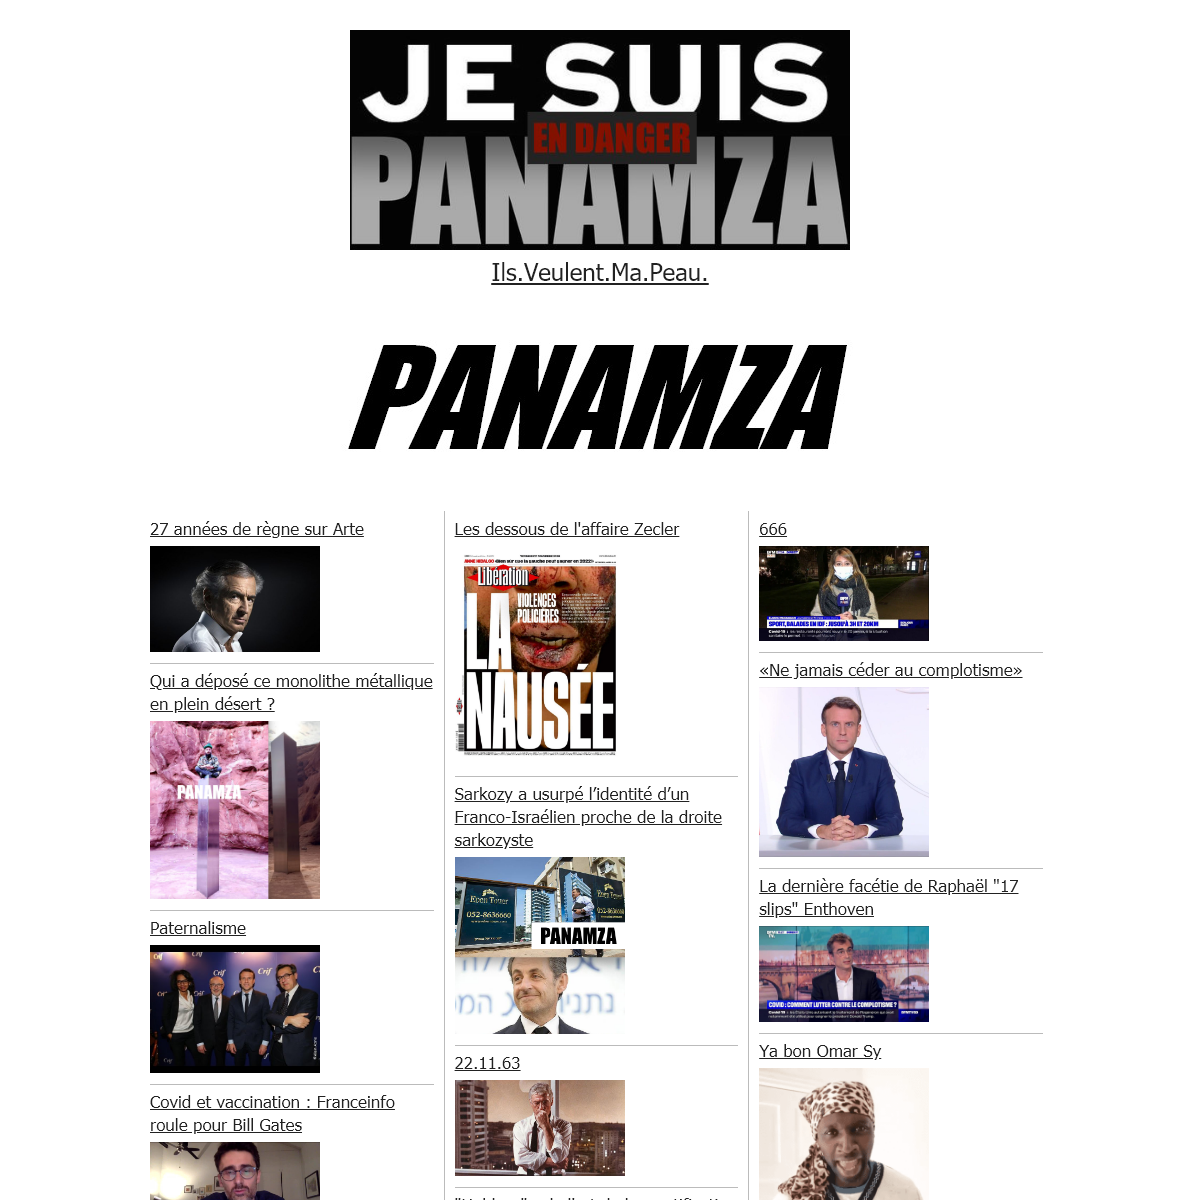 A complete backup of panamza.com